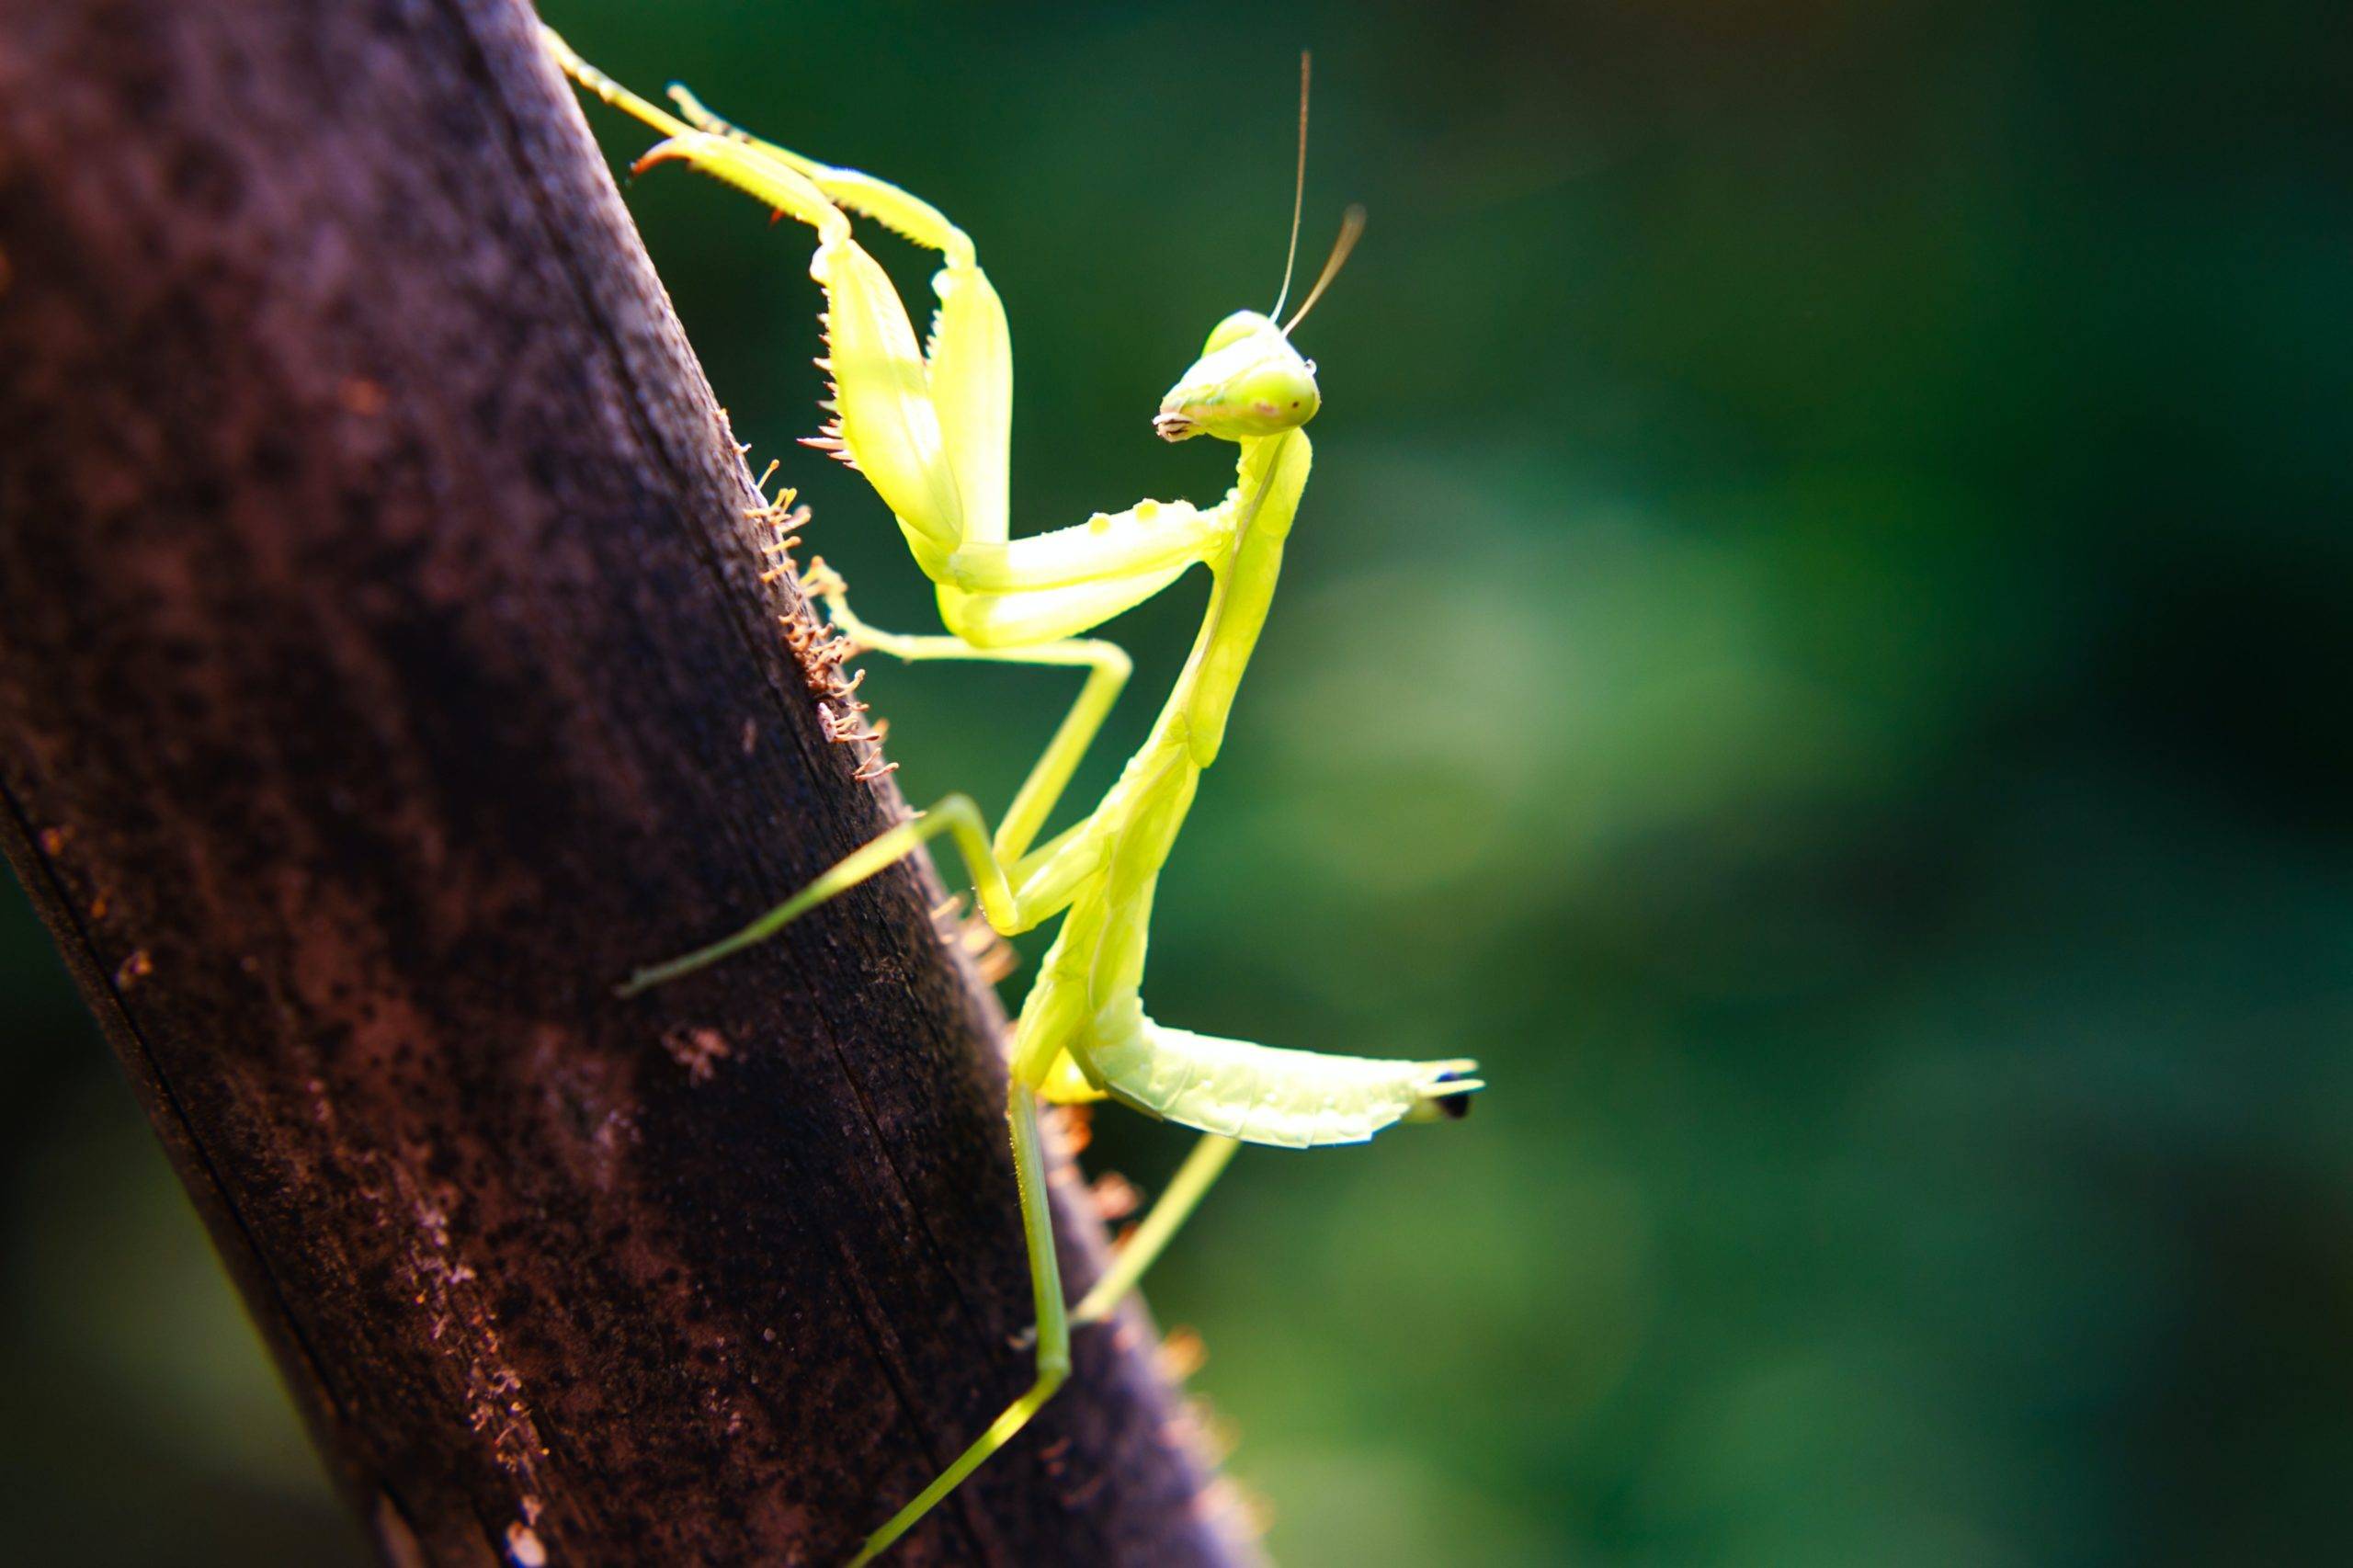 up close look at praying mantis on wooden branch